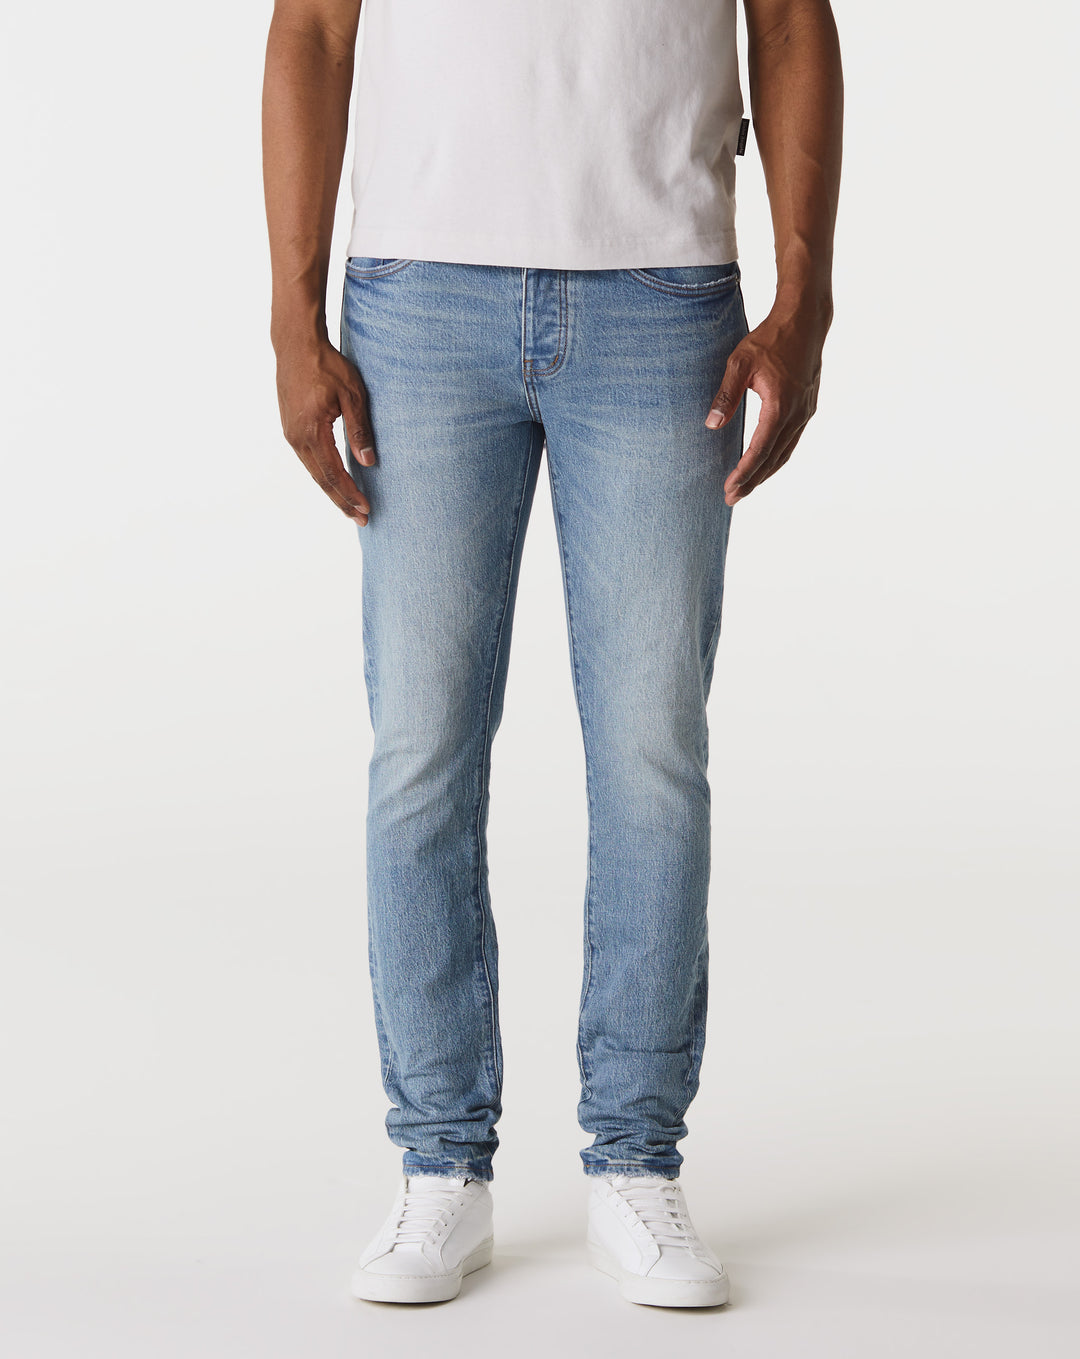 Purple Brand Jeans Mens Size 36 X 34 New Slim Fit Low Rise P001